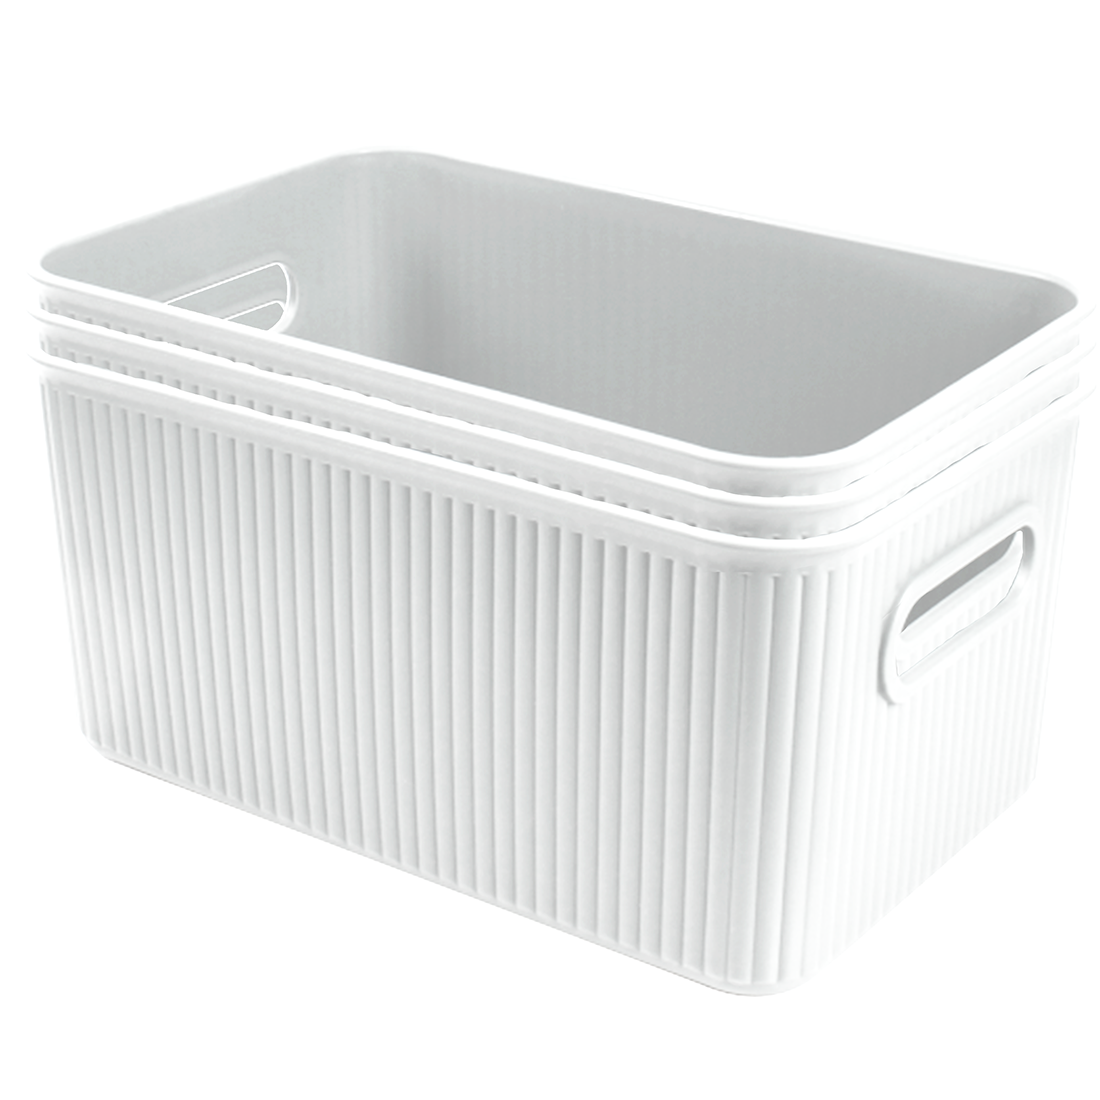 3 Pack Woven Plastic Storage Basket - Striped White